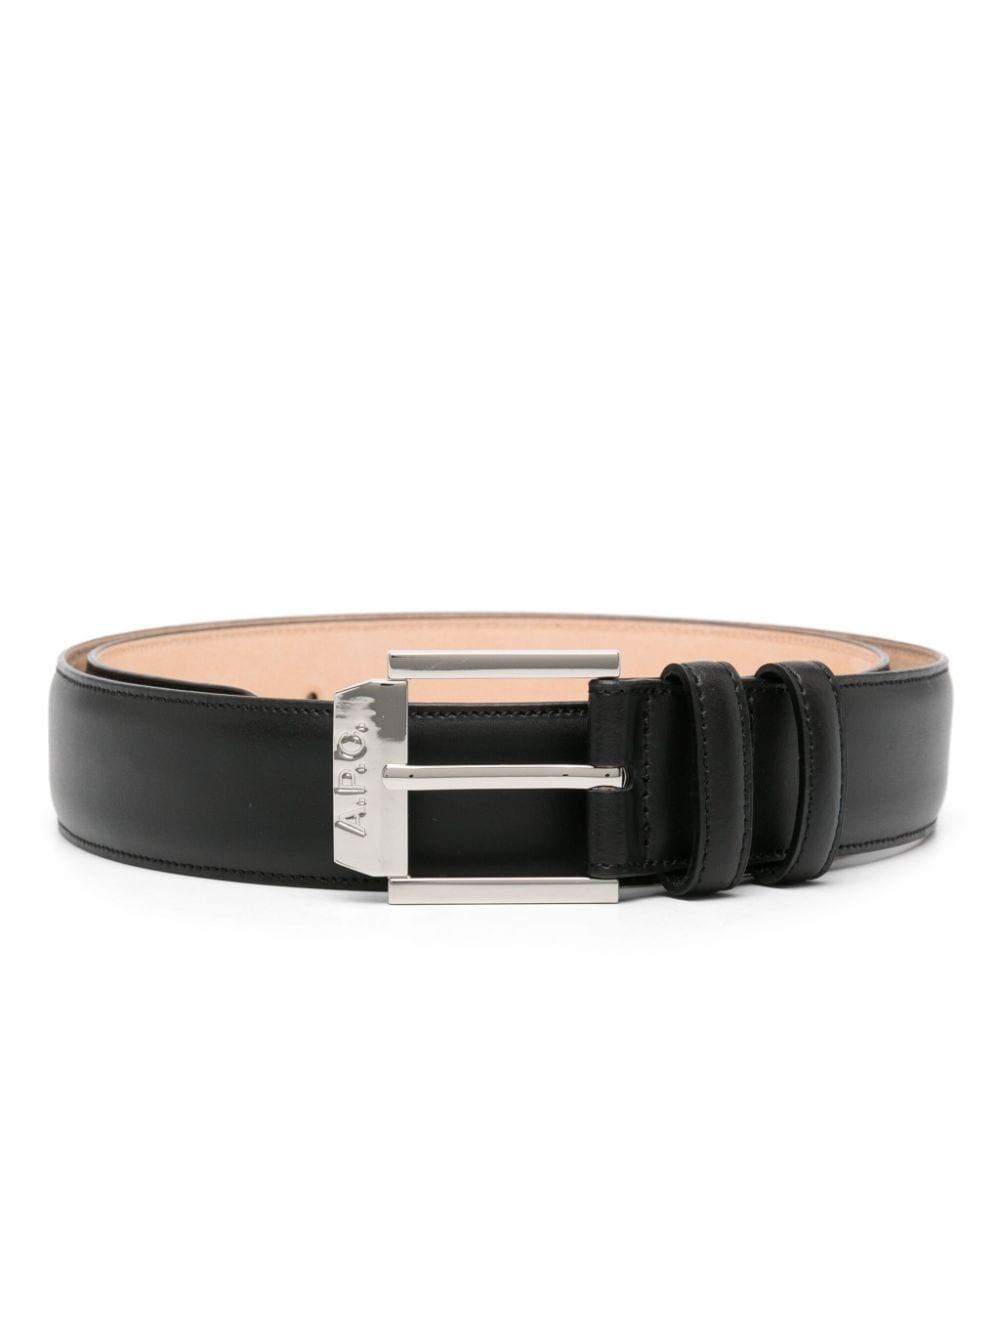 London leather belt - 1